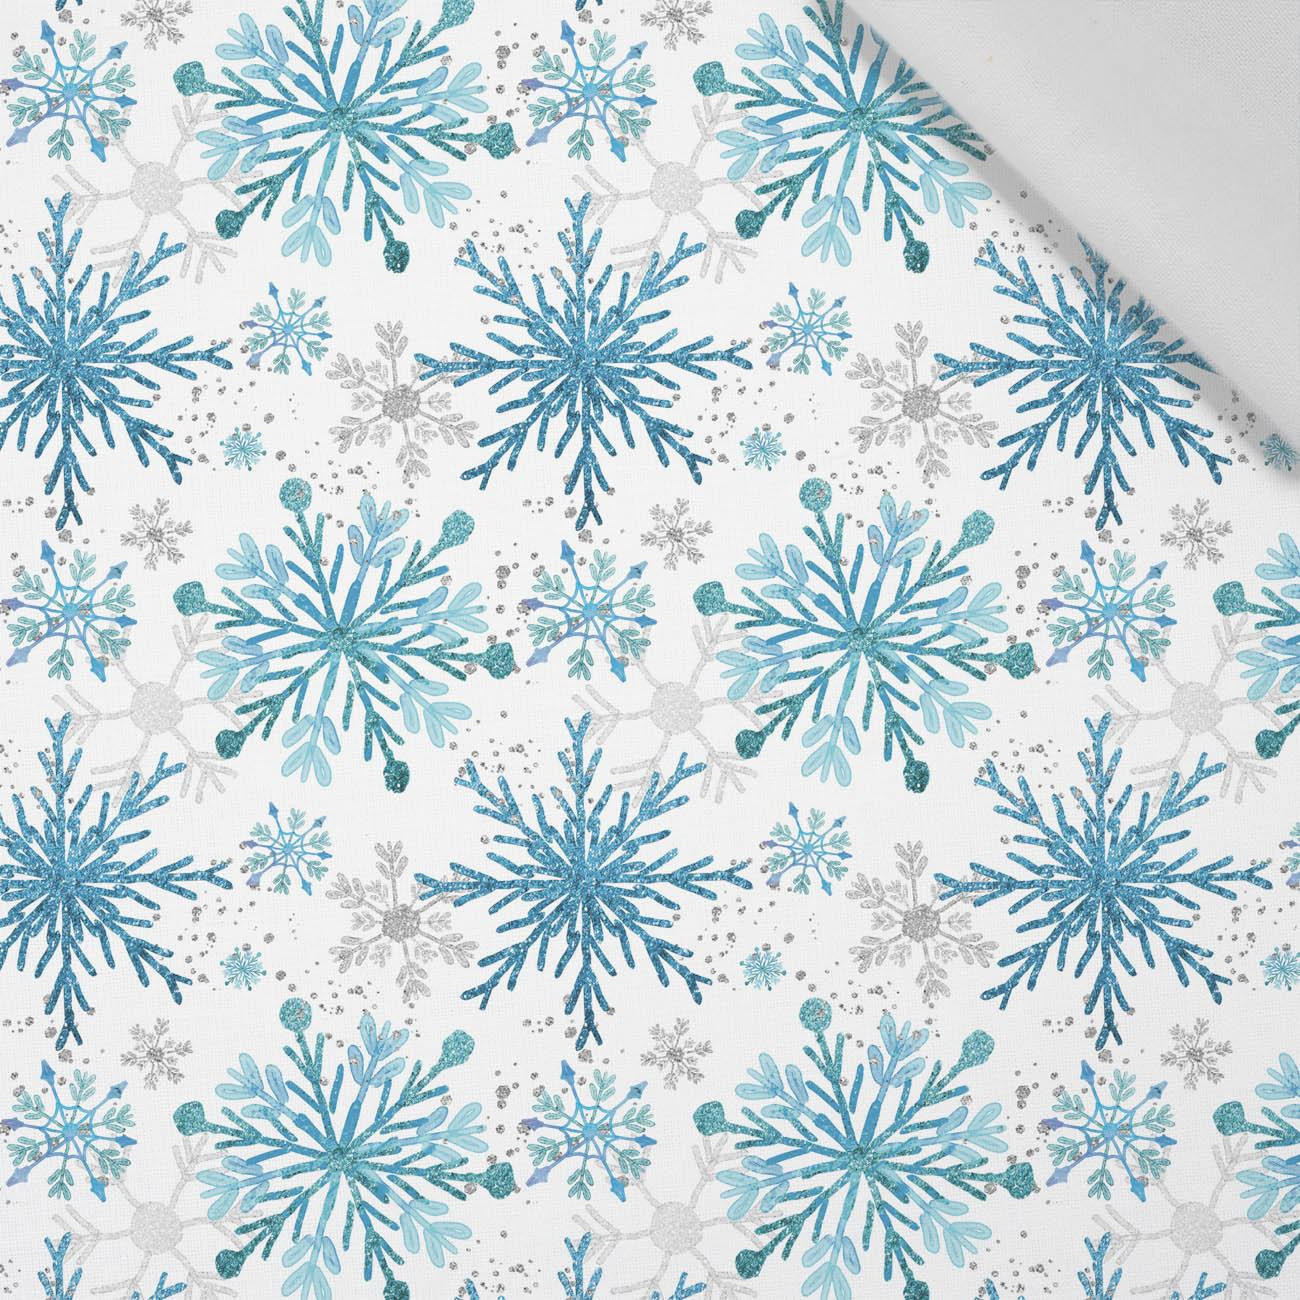 BLUE SNOWFLAKES pat. 2 - Cotton woven fabric